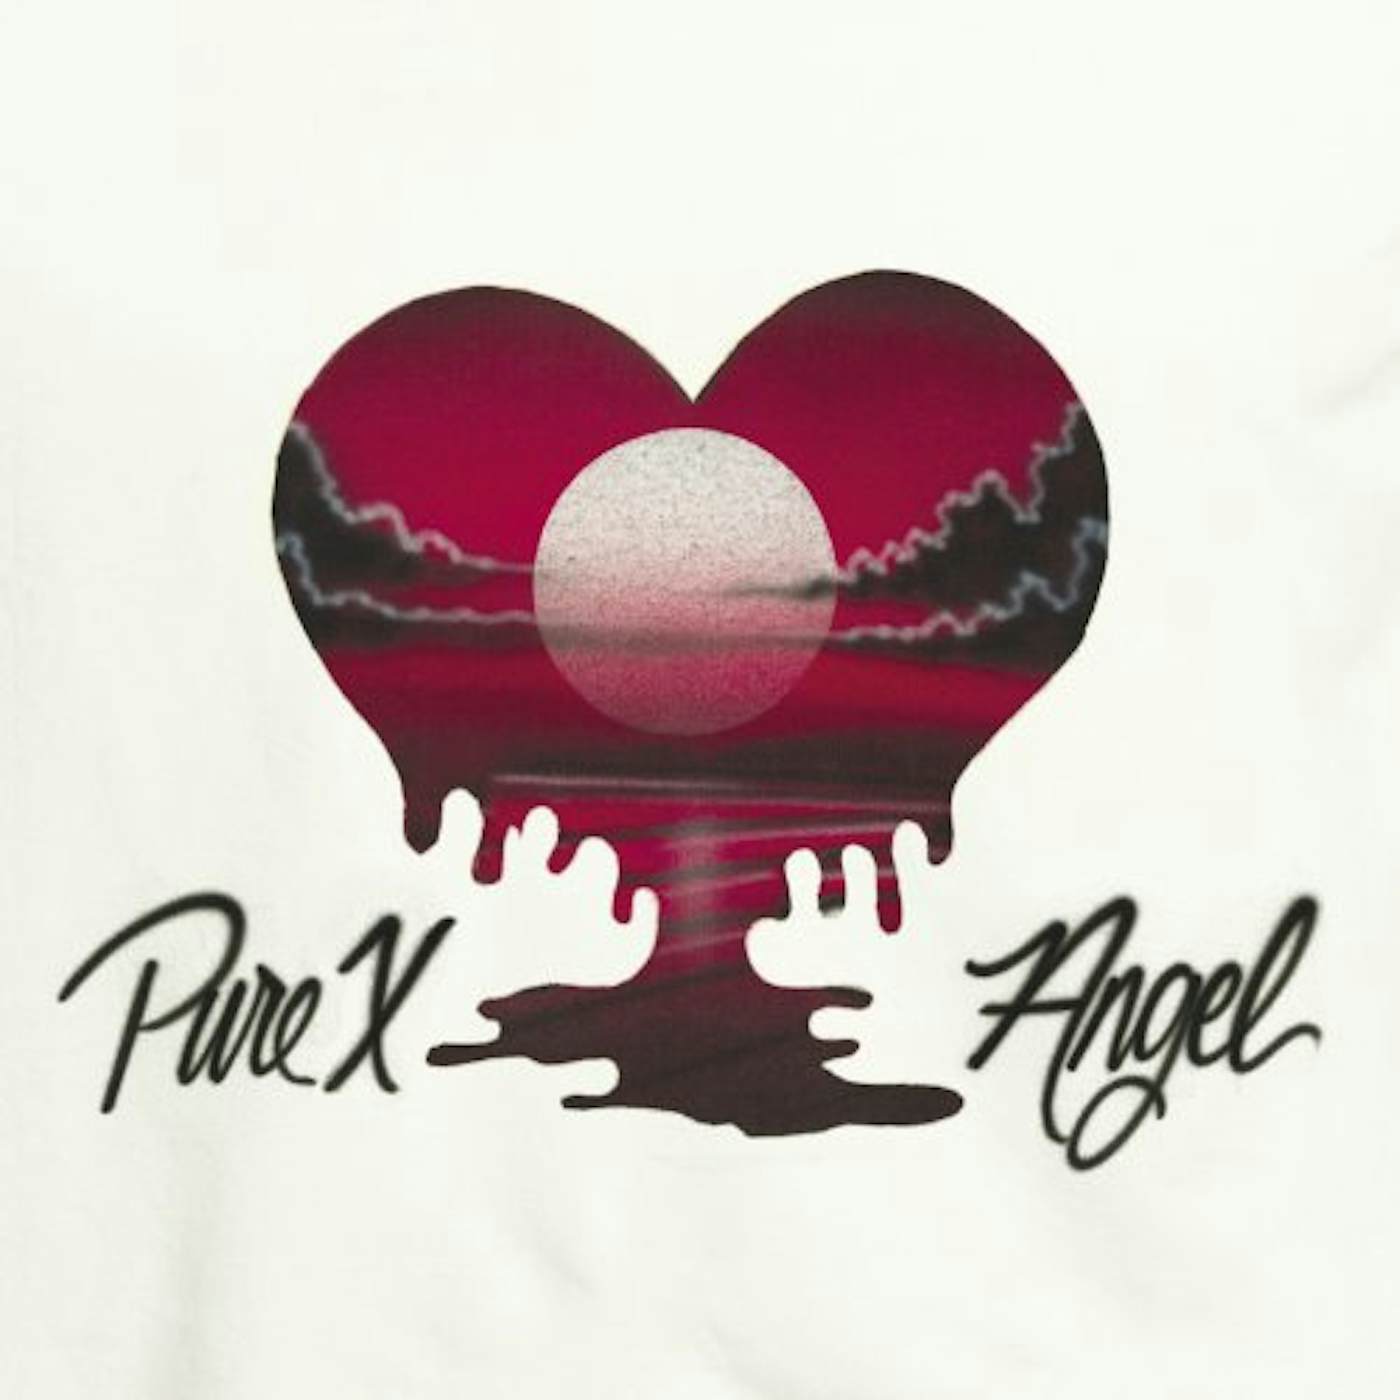 Pure X Angel Vinyl Record